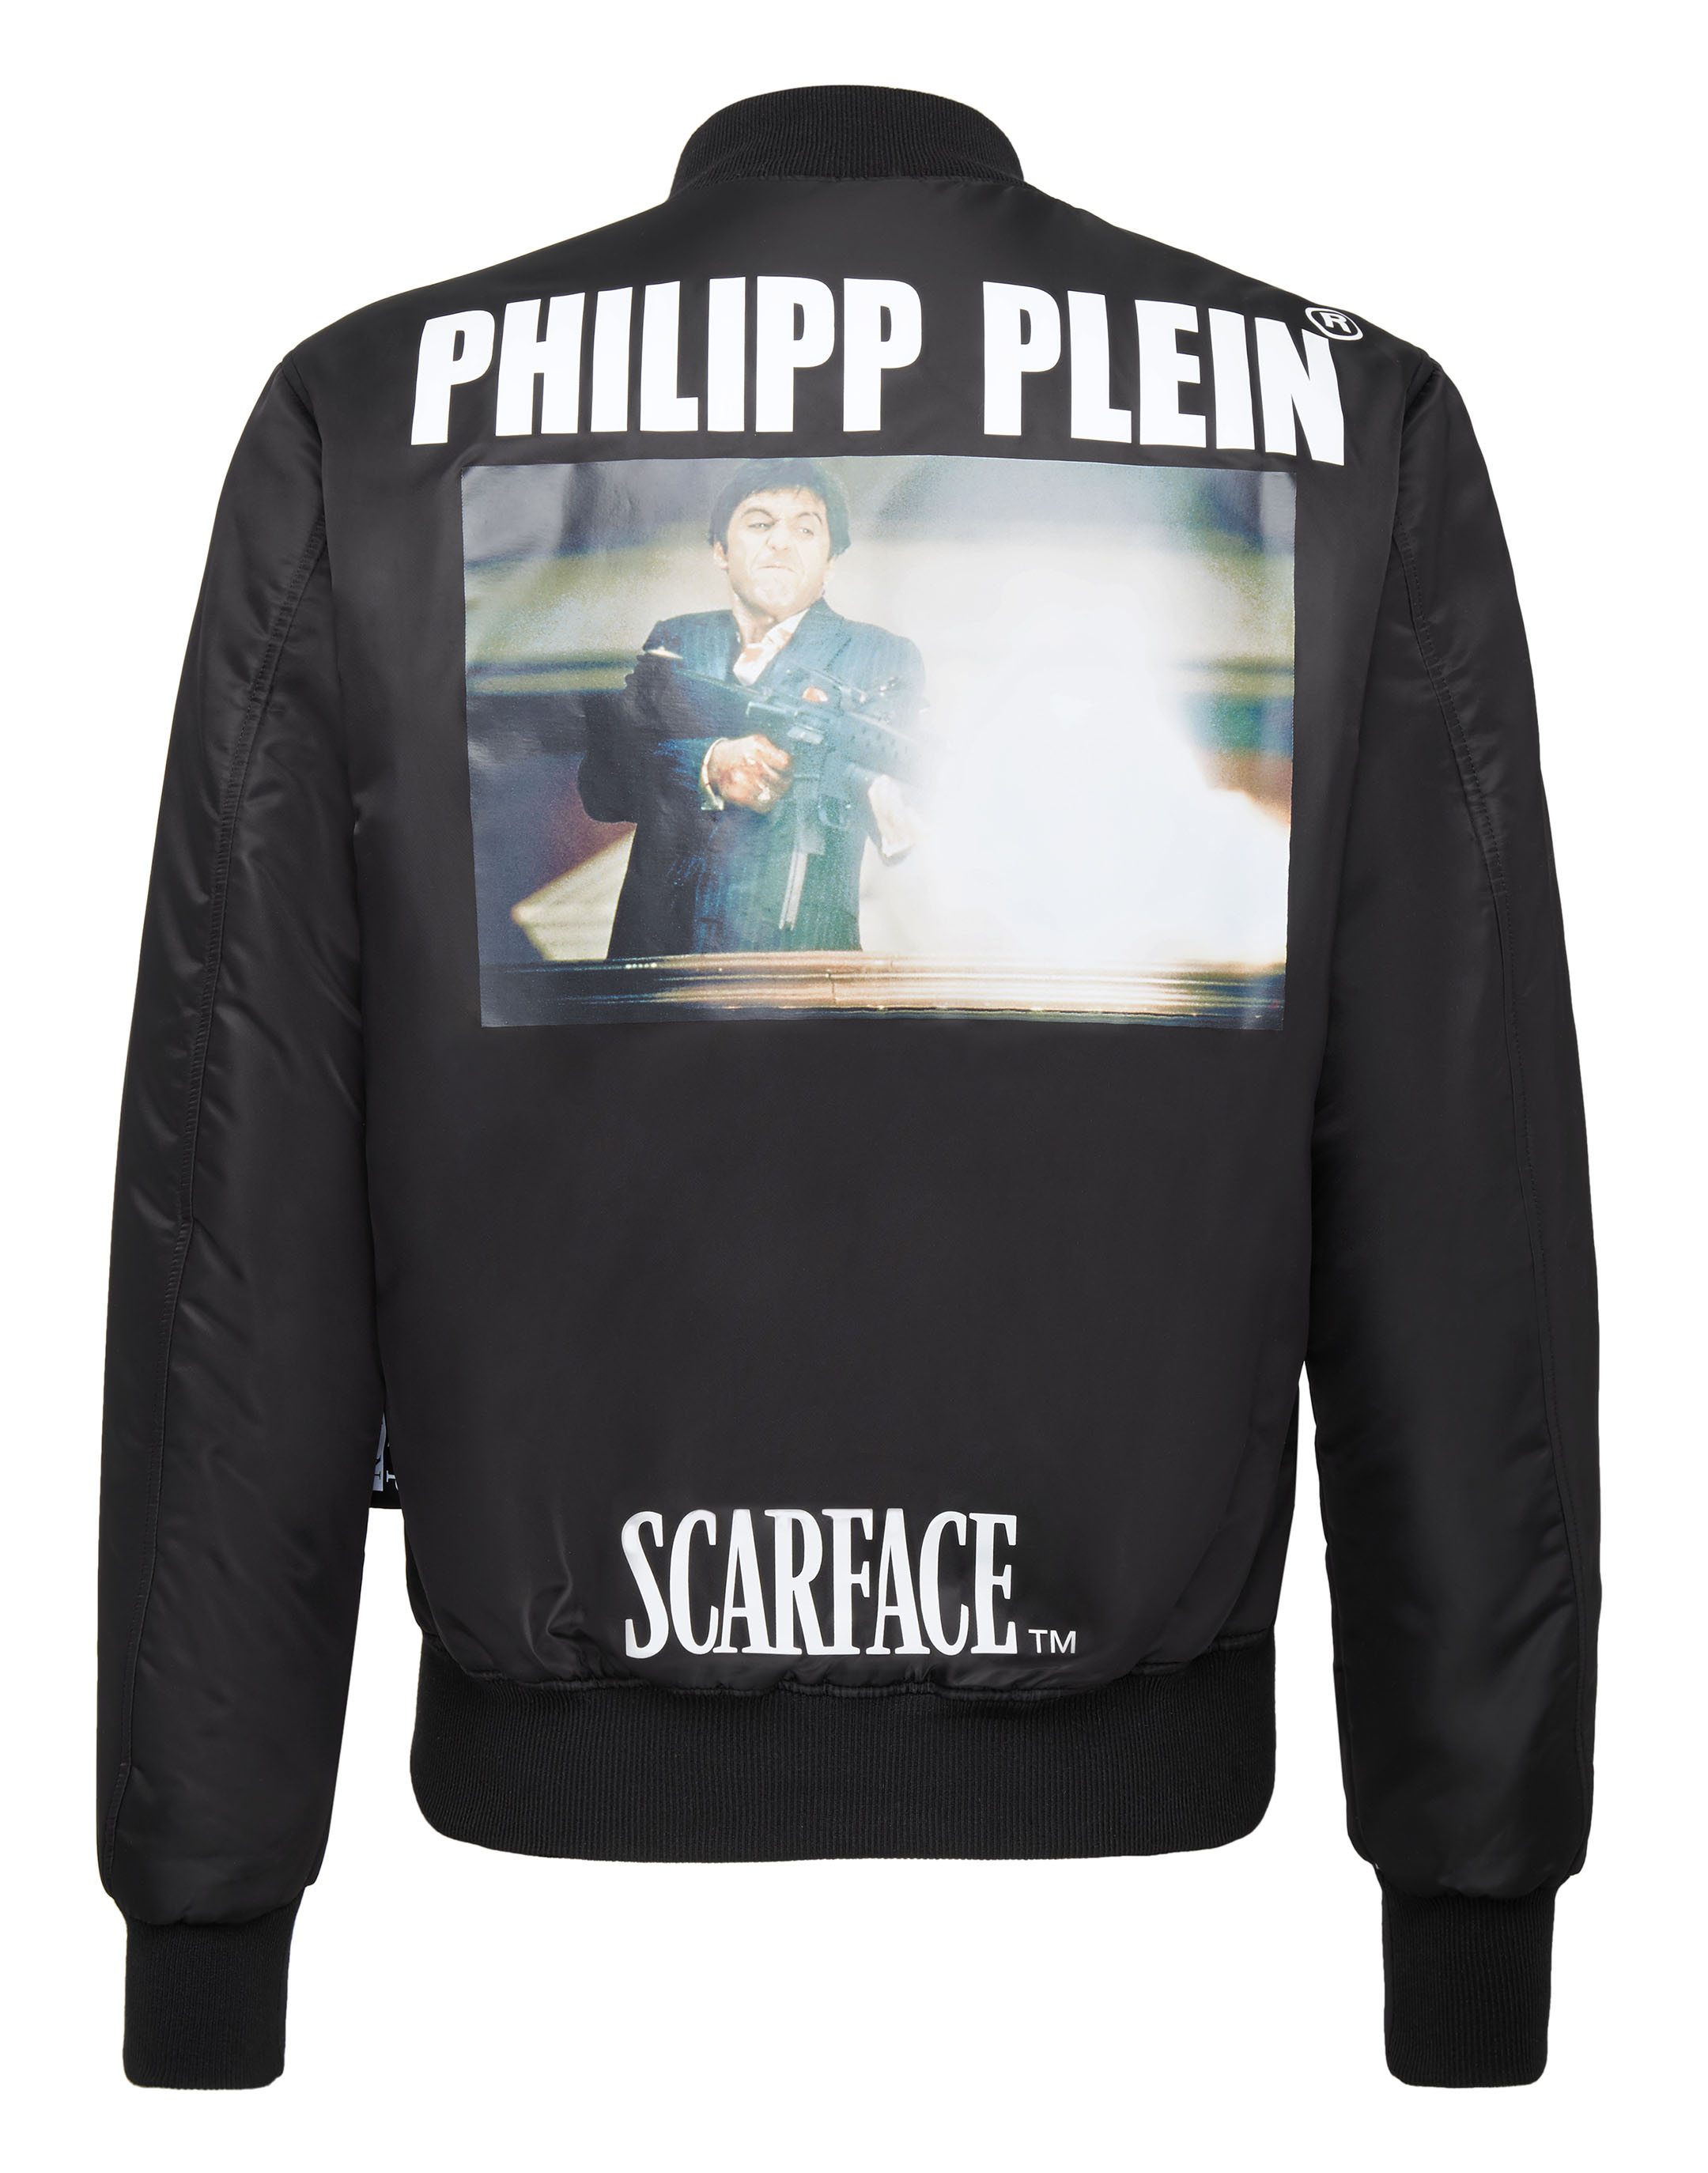 philipp plein scarface hoodie